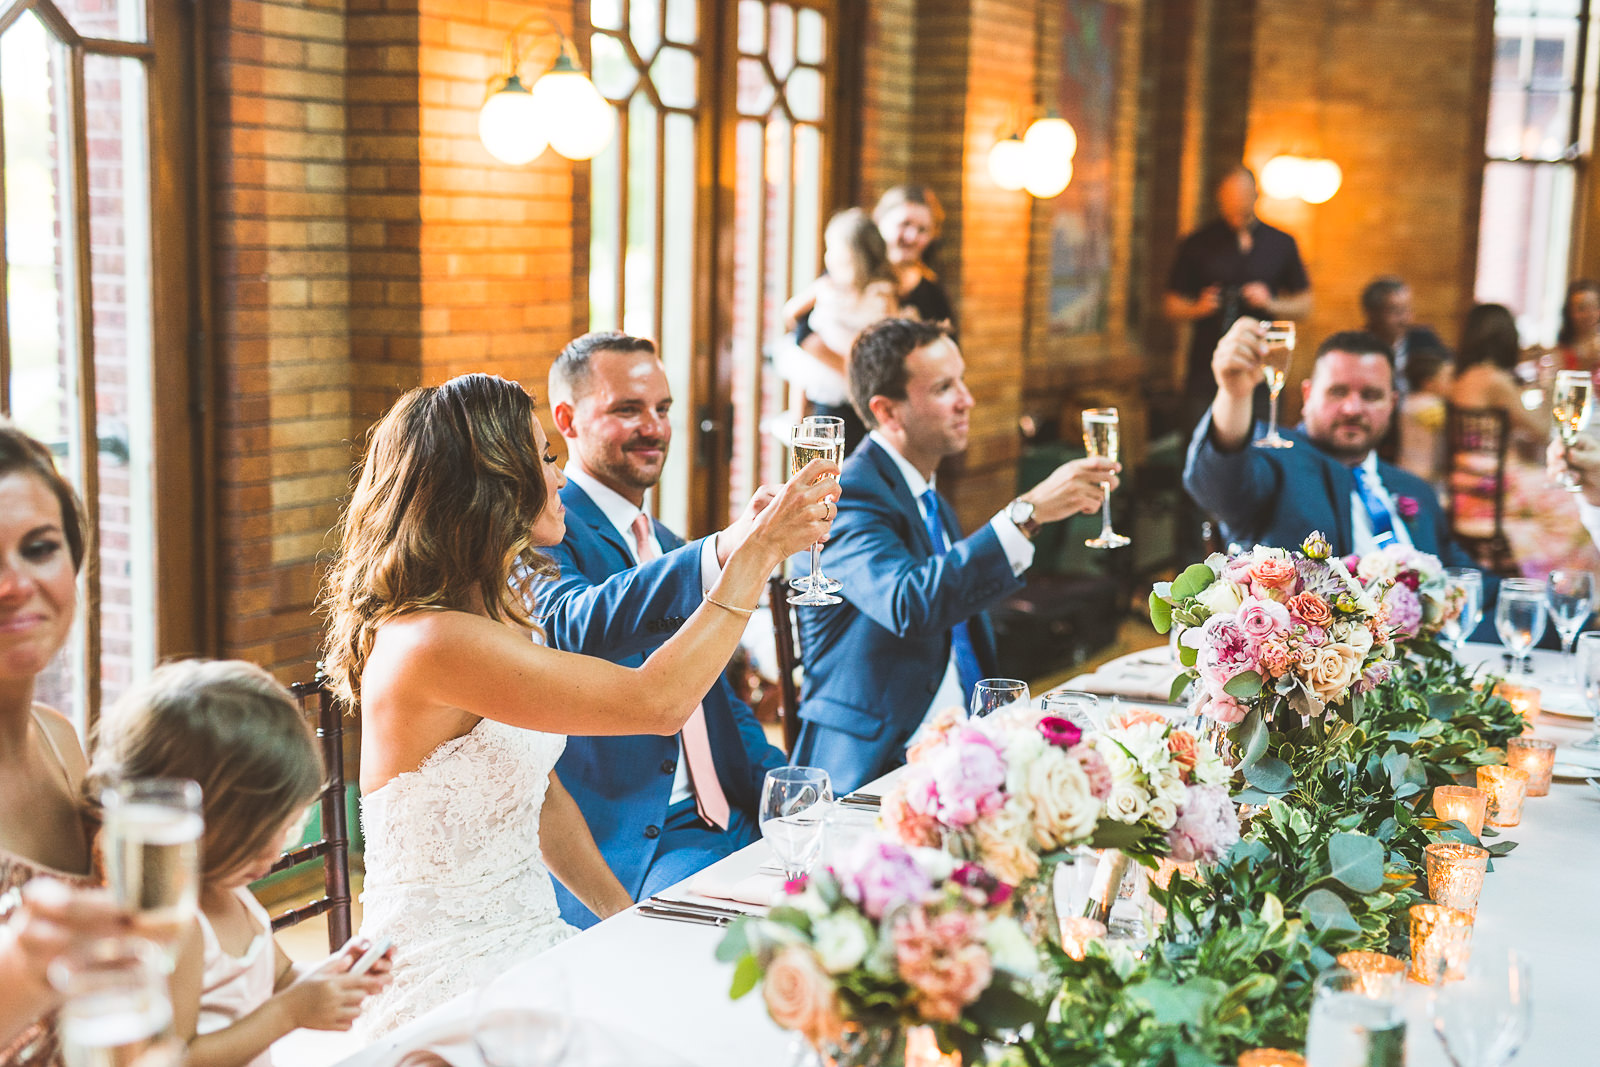 58 toasts - Natalie + Alan // Chicago Wedding Photographer at Cafe Brauer